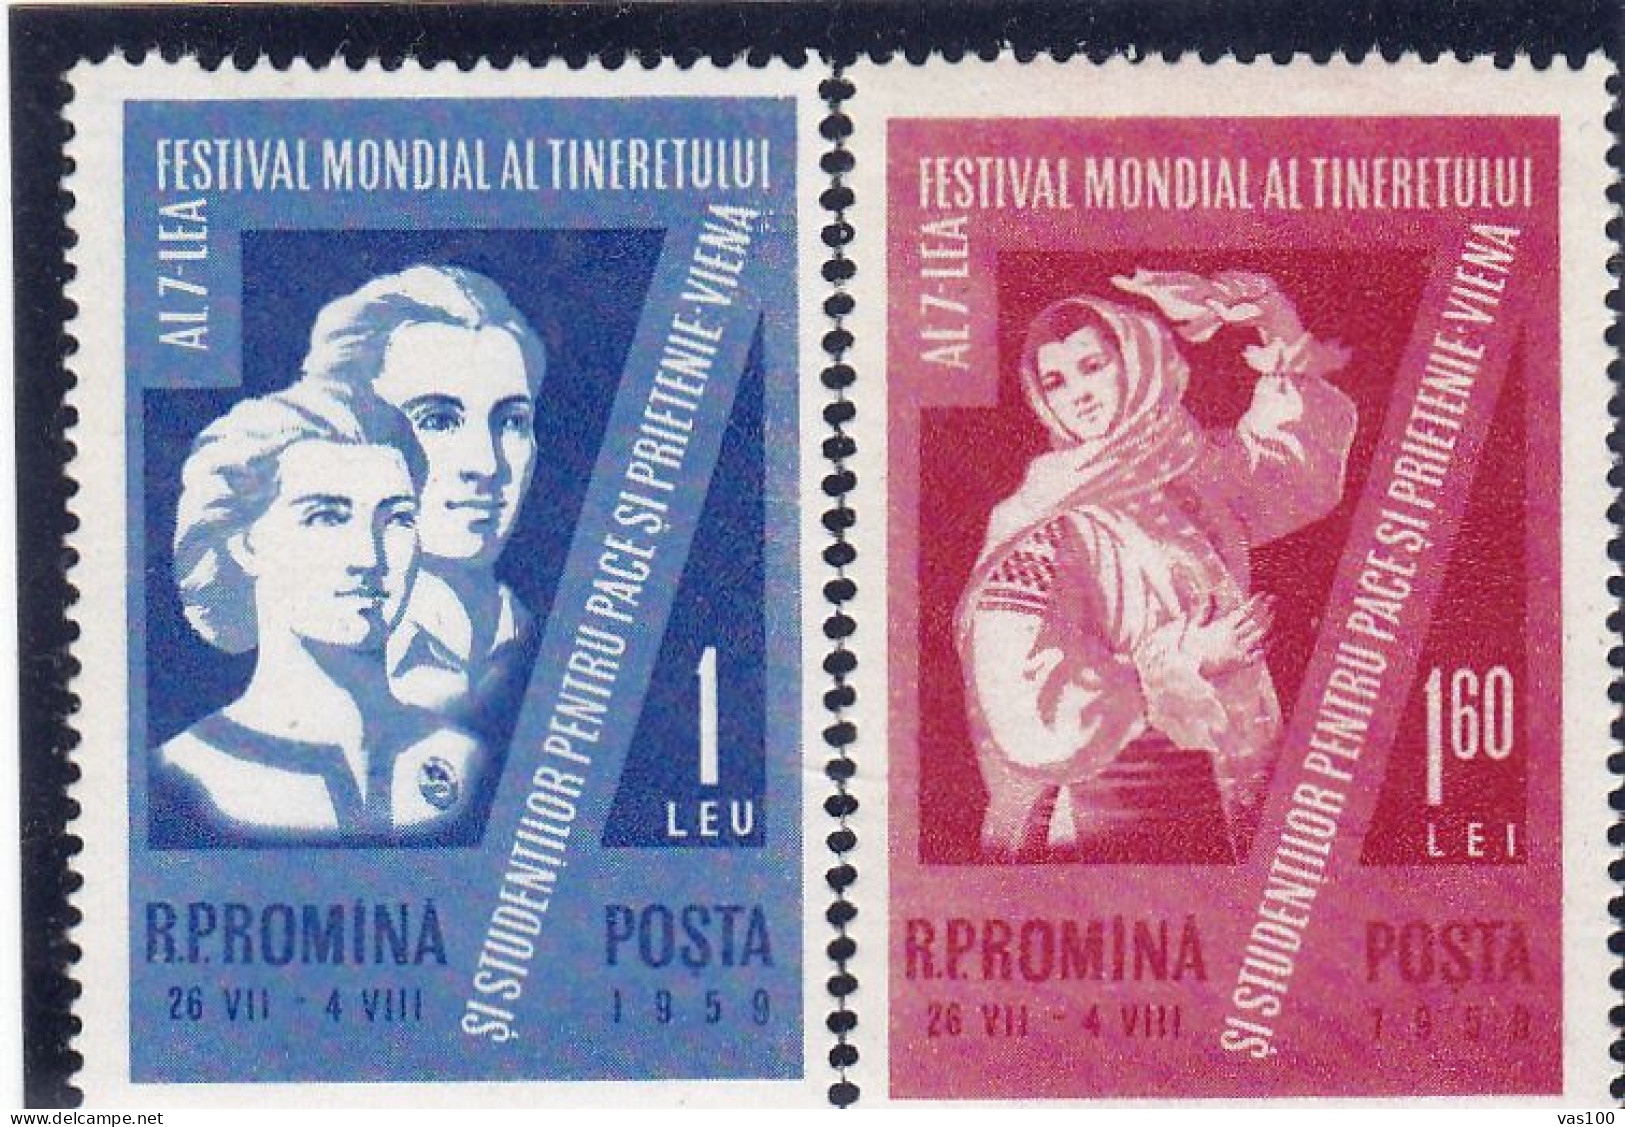 YOUTH,7TH YOUTH FESTIVAL-WIEN,1959,MI.1790/91, MNH**, ROMANIA. - Nuovi